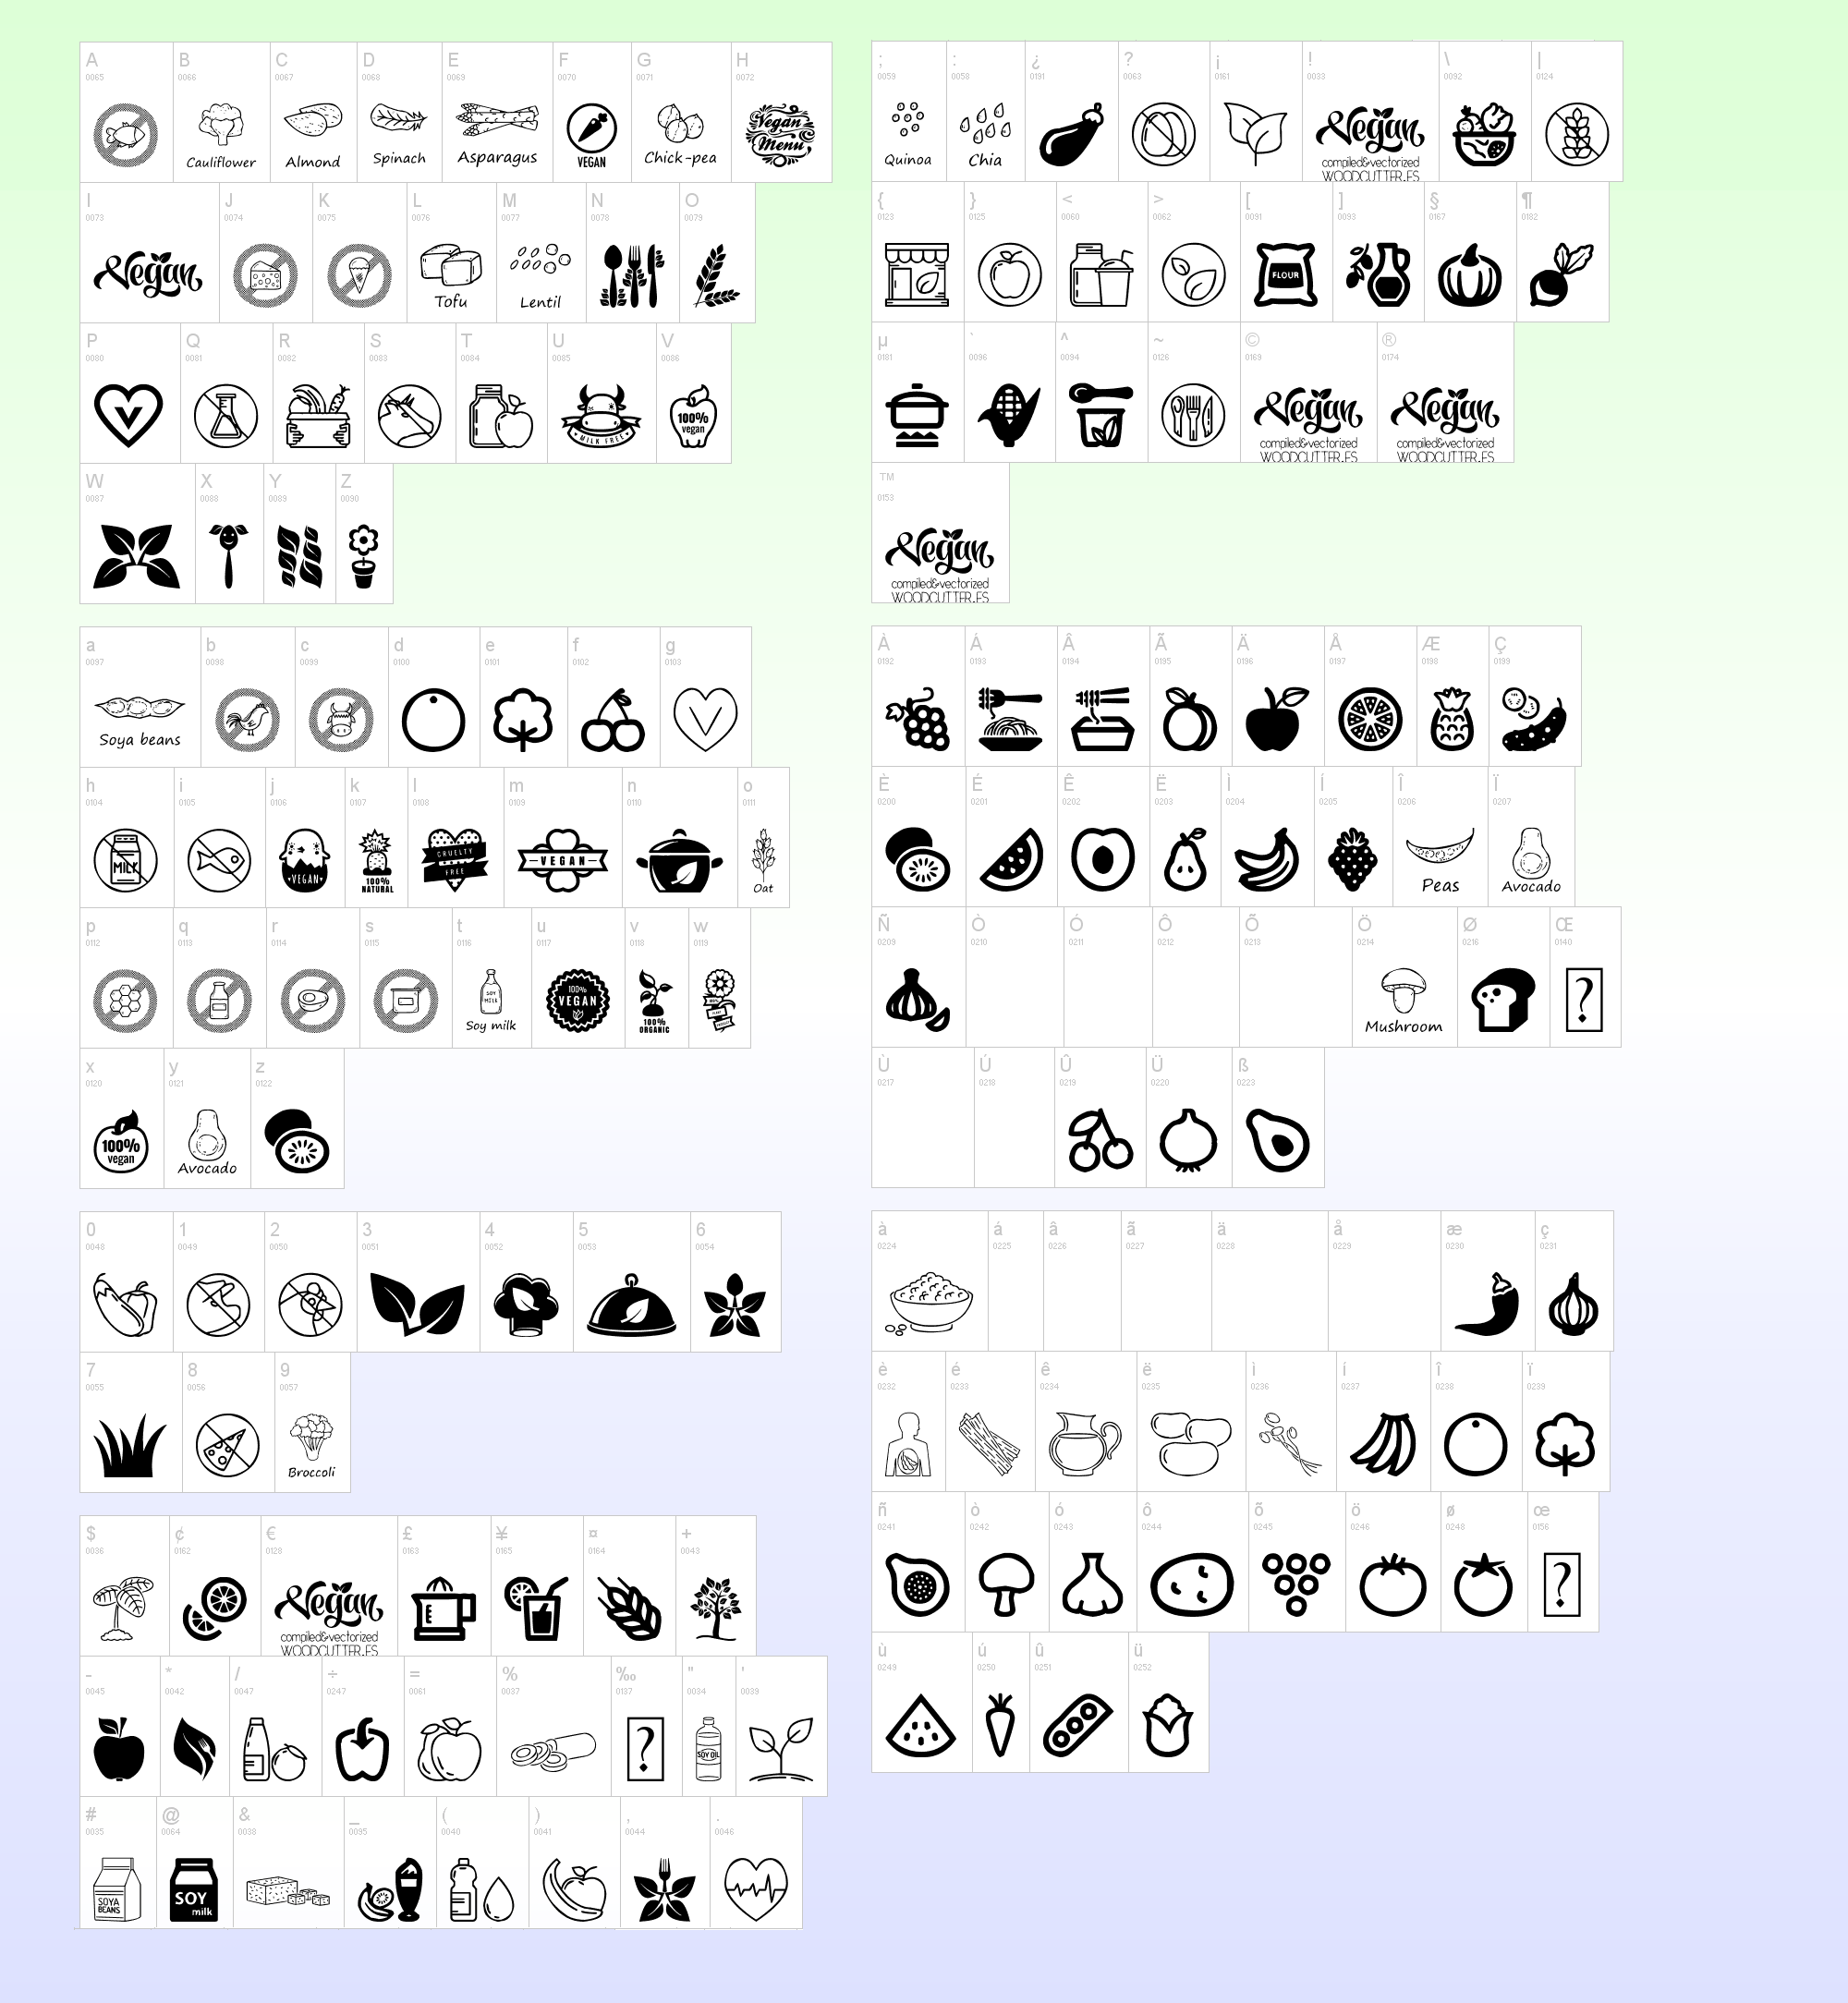 Copy and white emoji paste black 🏿 Black